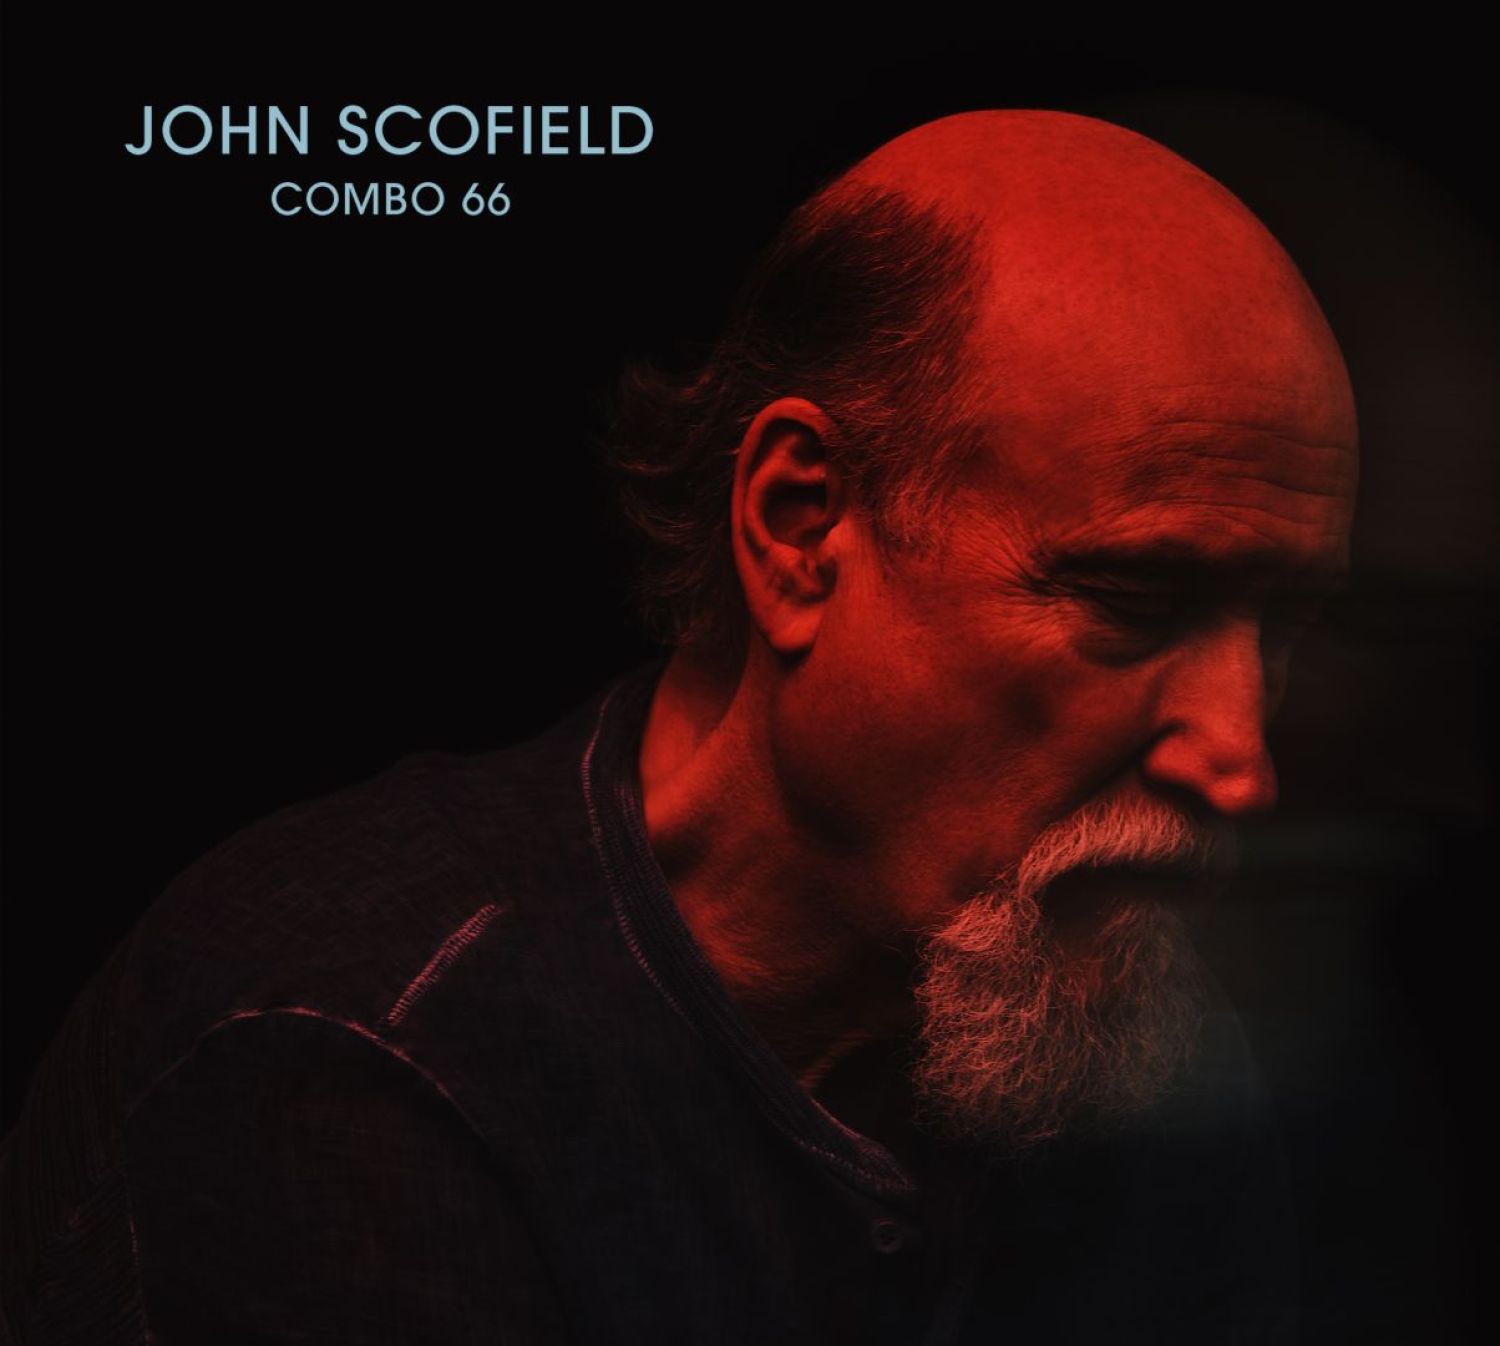 John Scofield Combo 66